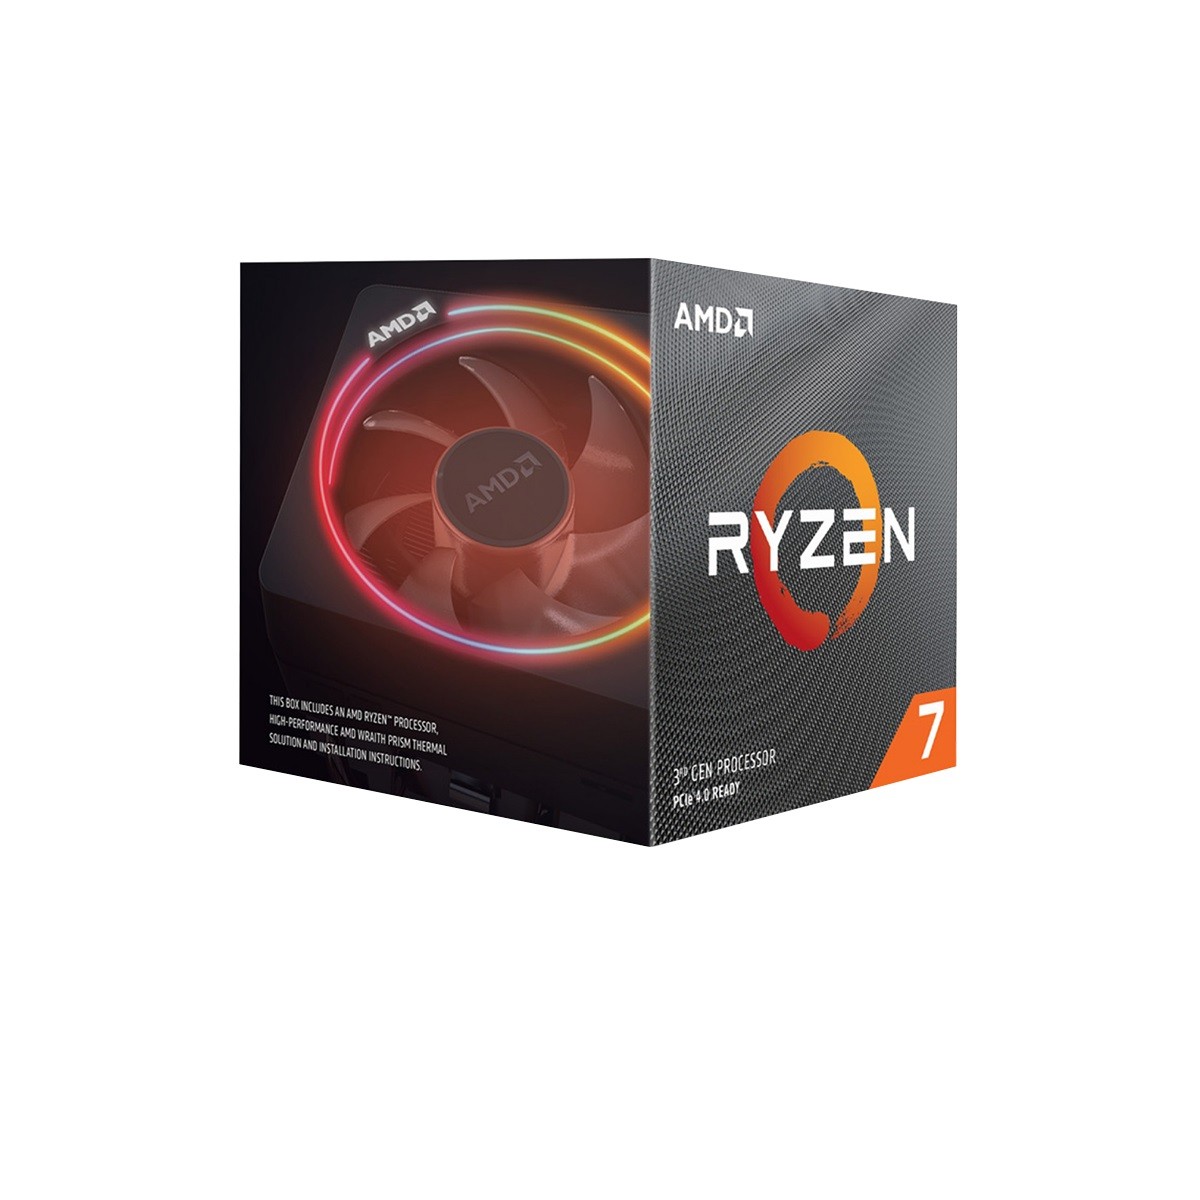 Kit Upgrade Sapphire Radeon Nitro+ AMD Radeon RX 6700 XT + AMD Ryzen 7 3700X + Brinde Jogo Dirt 5